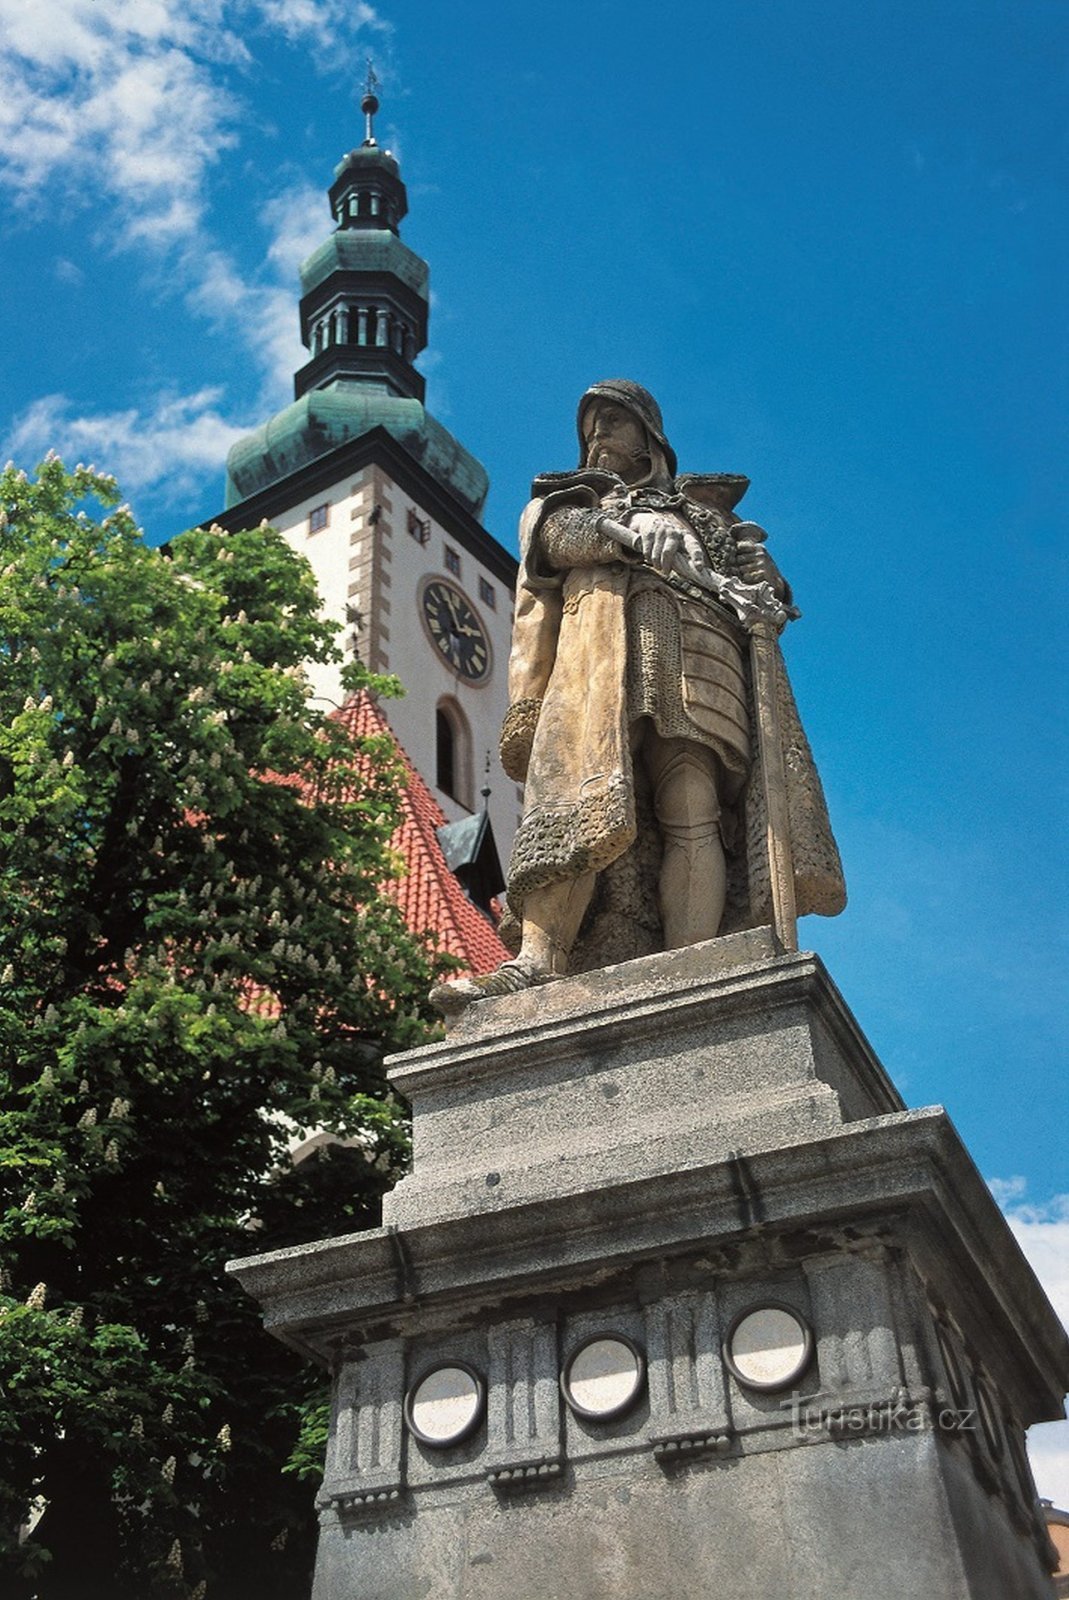 Staty av Jan Žižka (c) Staden Tábor